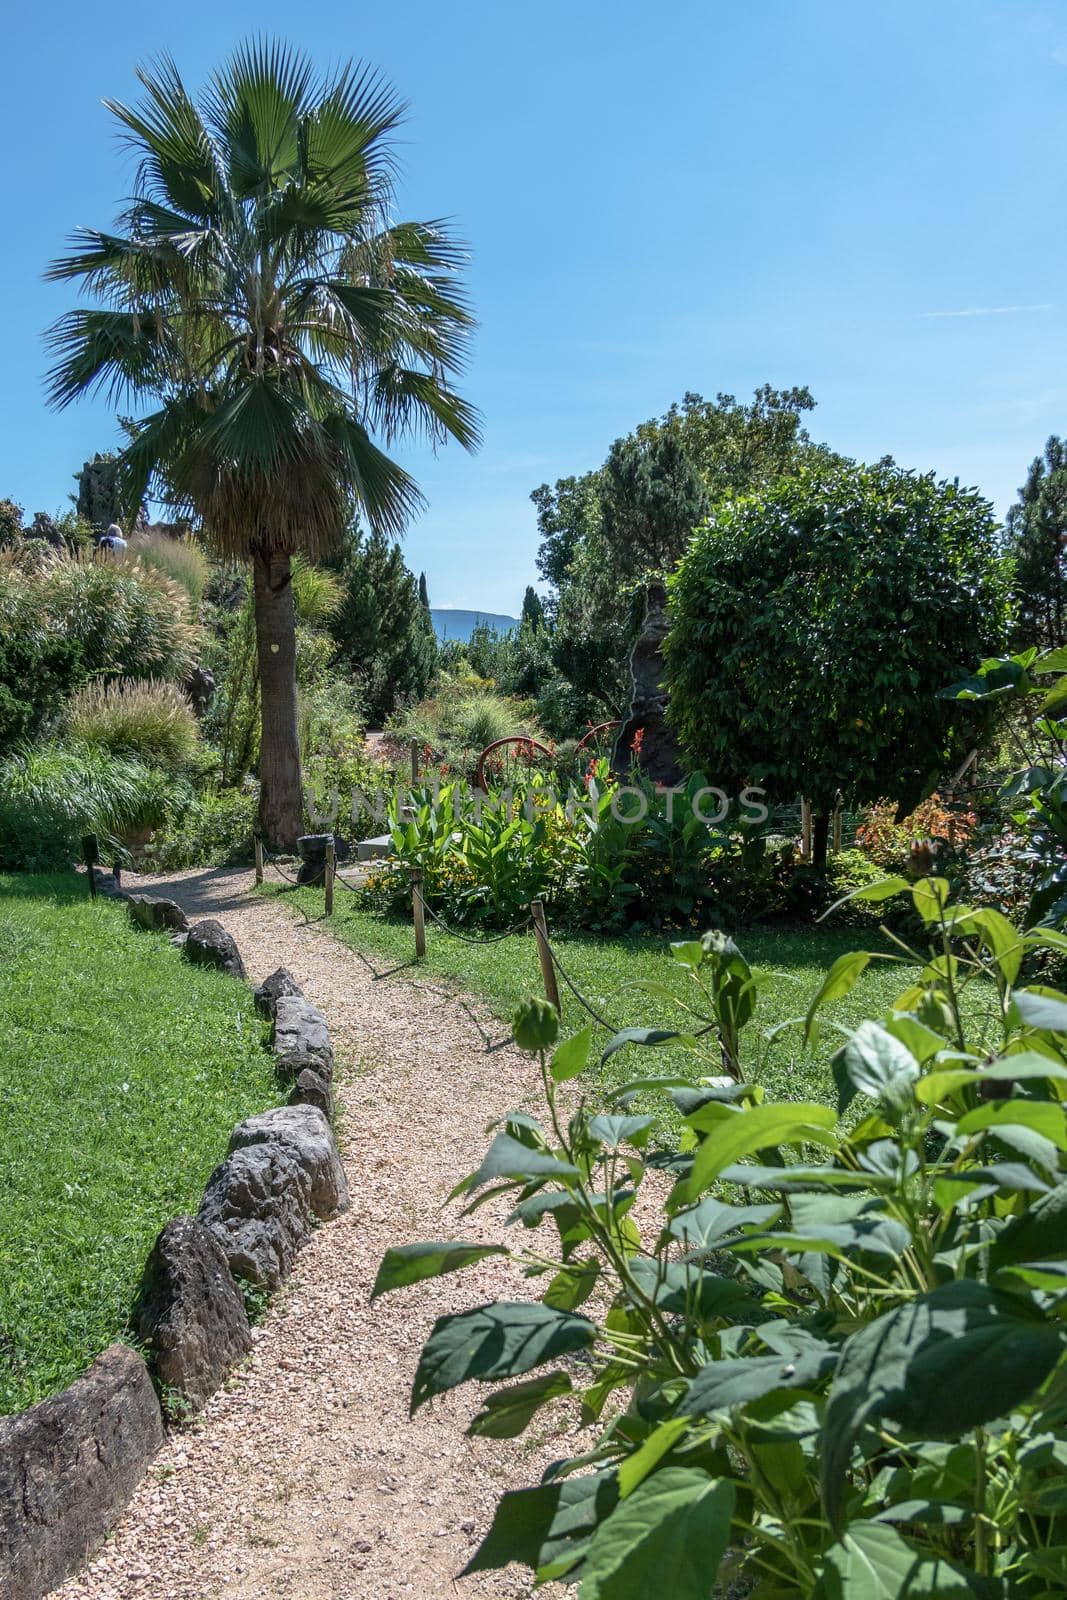 André Heller Botanical Garden. Gardone Riviera (BS), ITALY - August 25, 2020